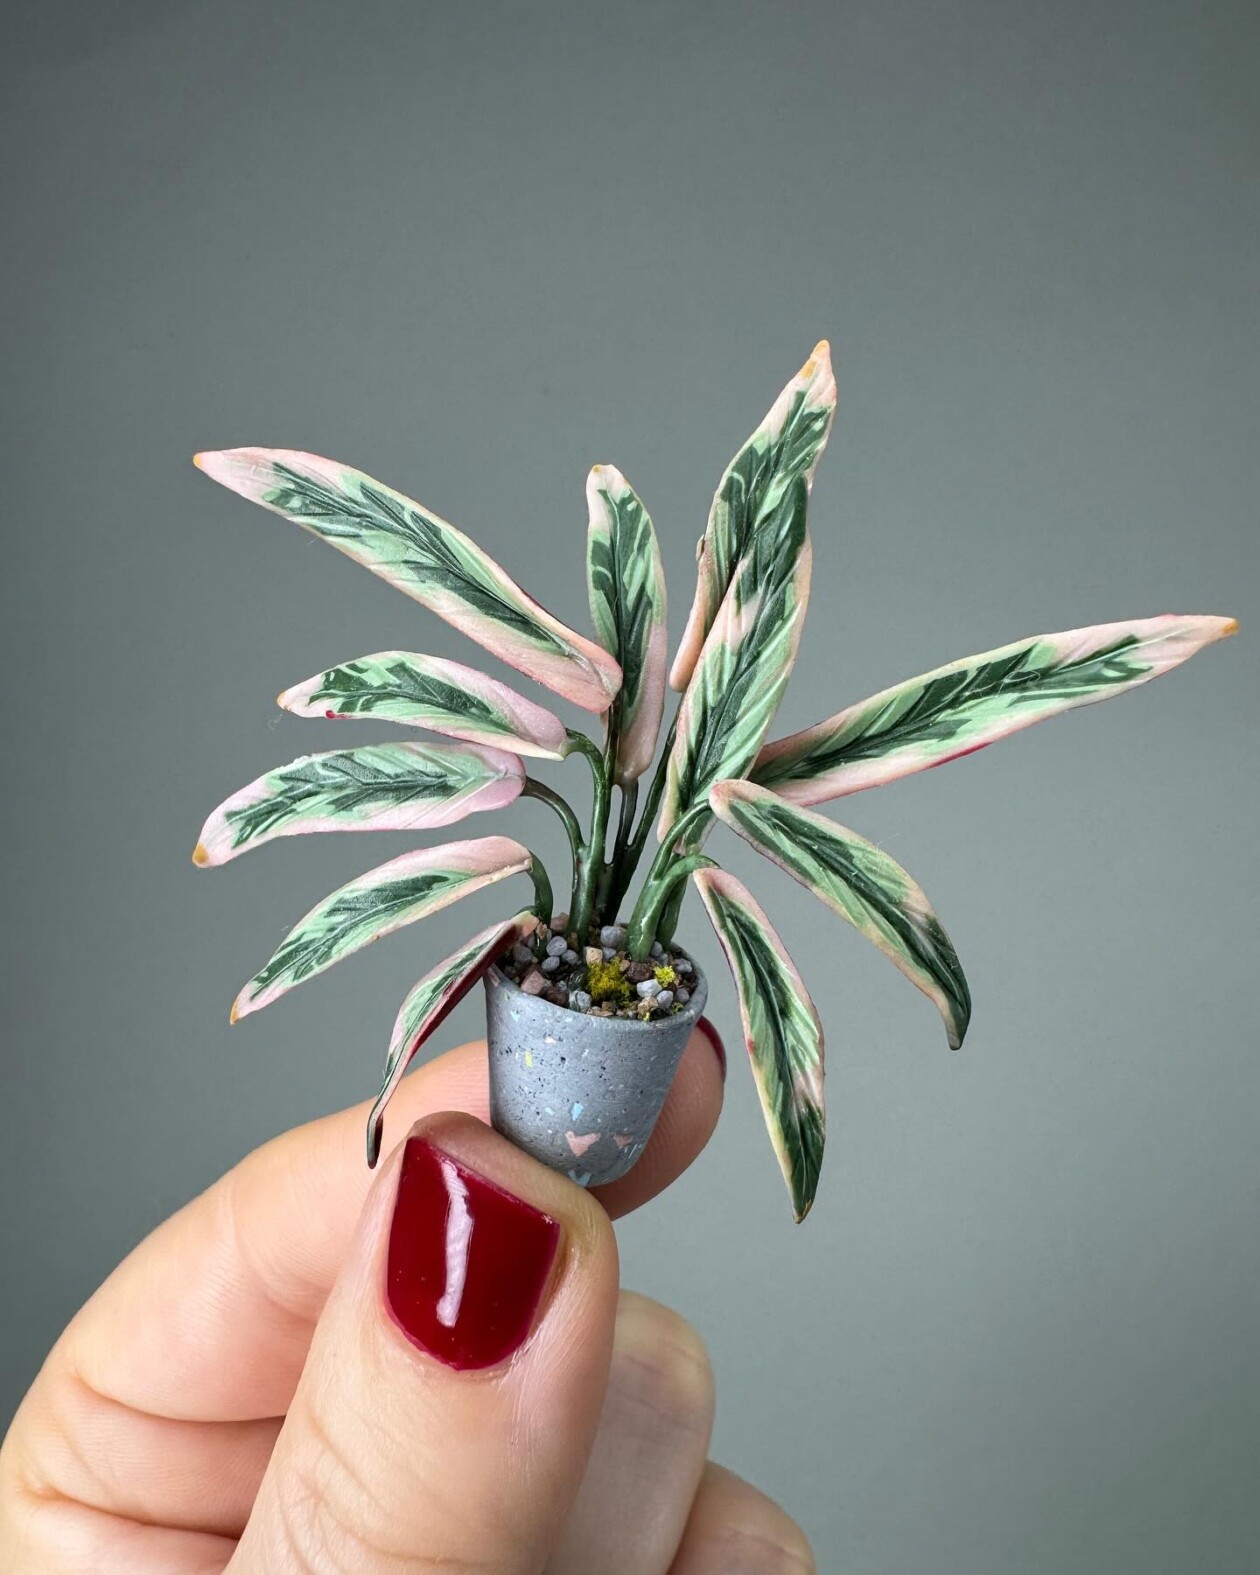 Handmade Miniature Polymer Clay Plants By Astrid Wilk (7)